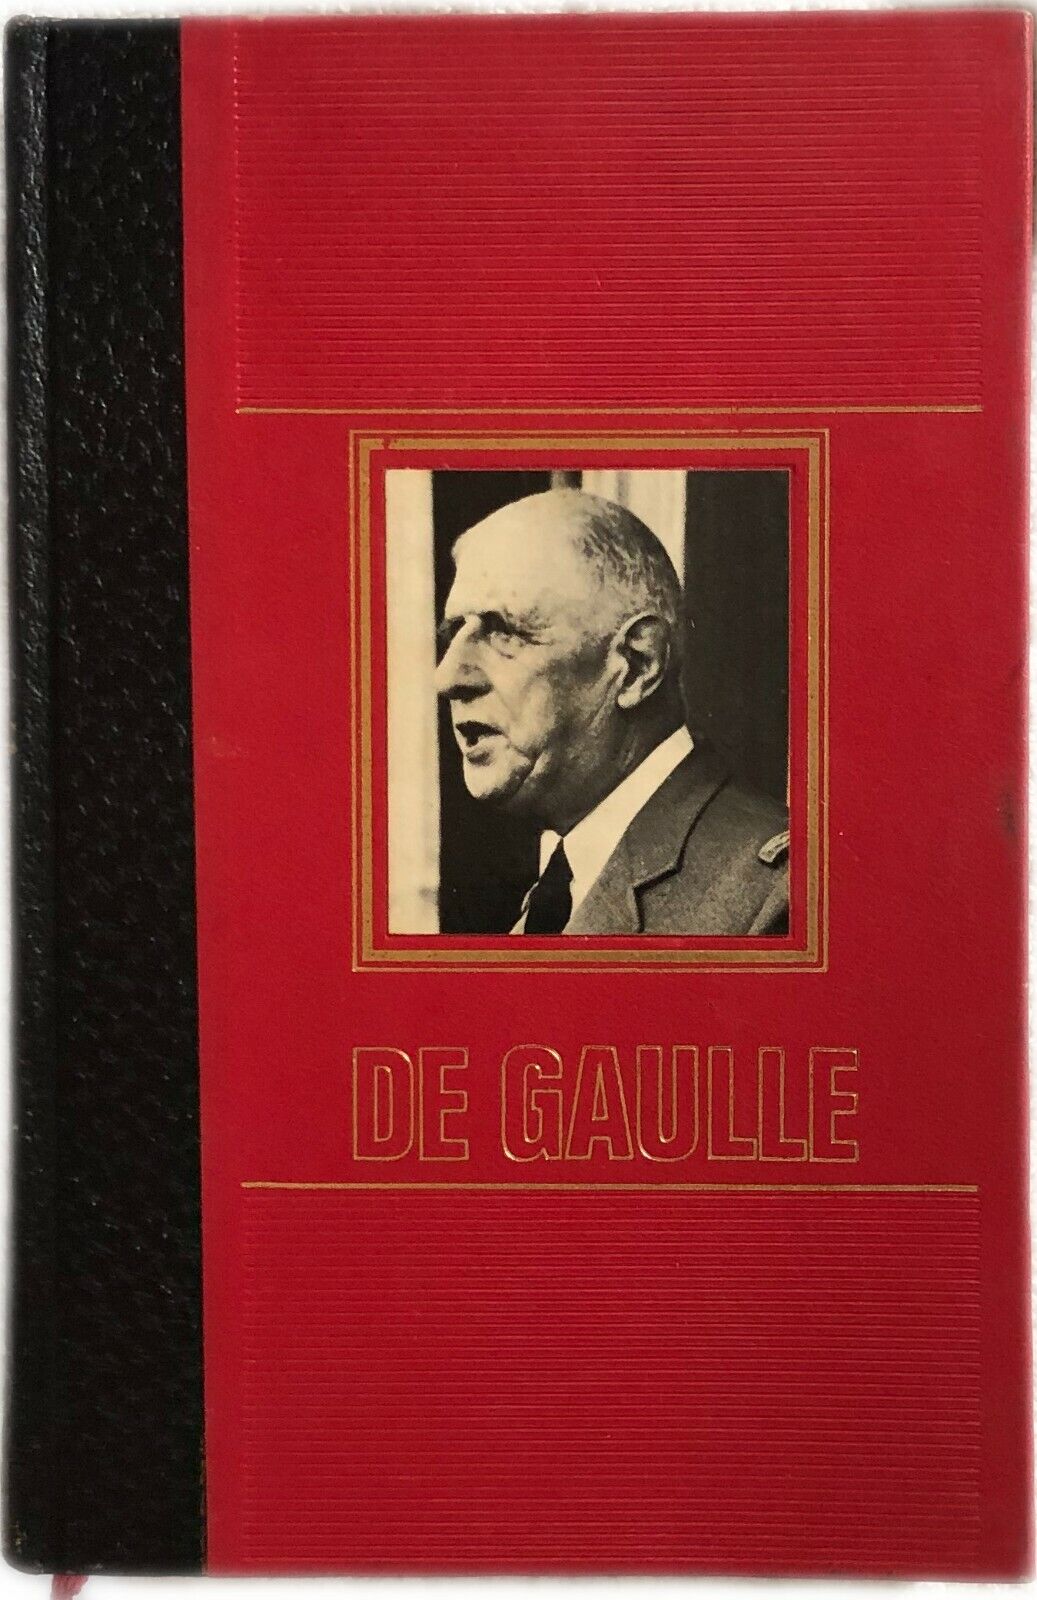 La vita avventurosa di Charles De Gaulle di Jaime Jerez,  1971,  Edizioni Di Cr?